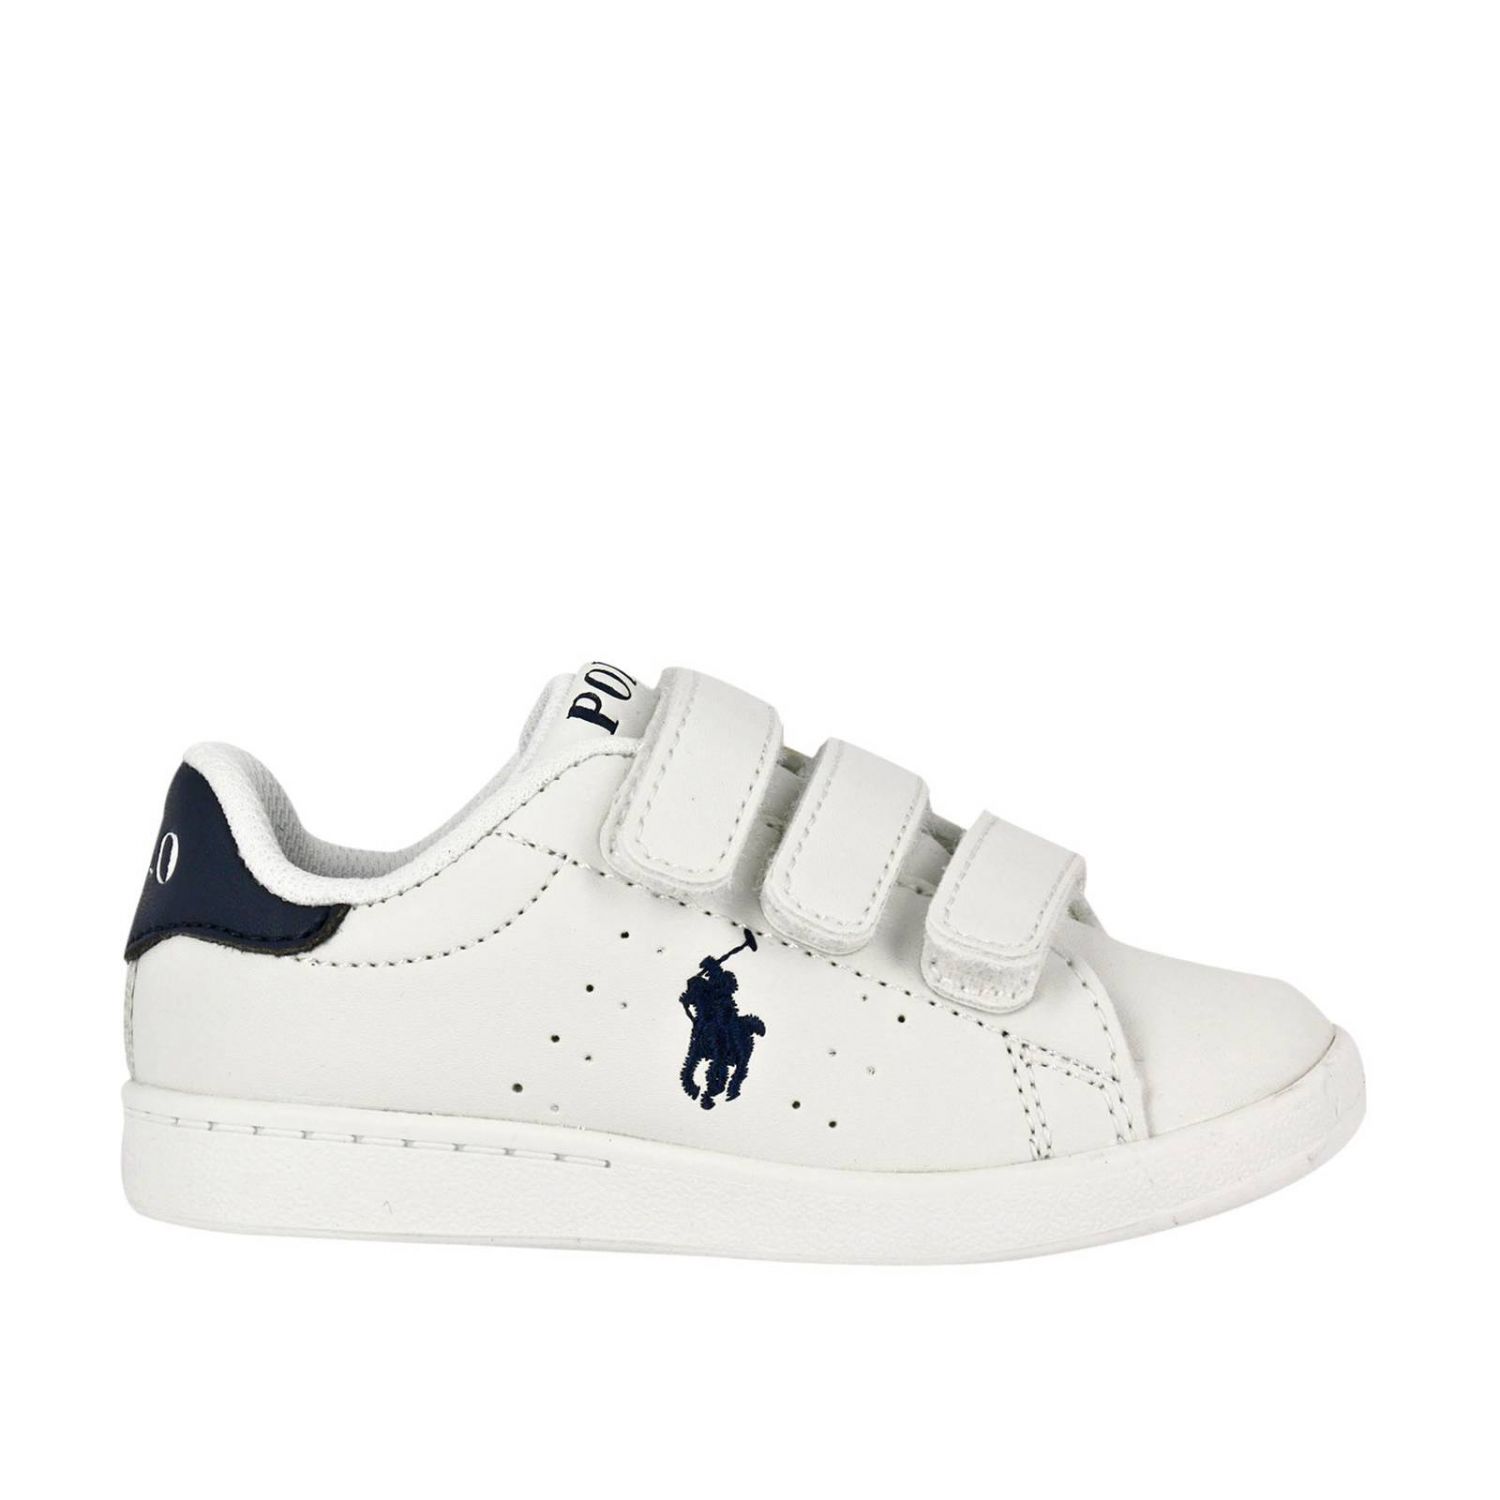 Shoes kids Polo Ralph Lauren | Shoes Polo Ralph Lauren Kids White ...